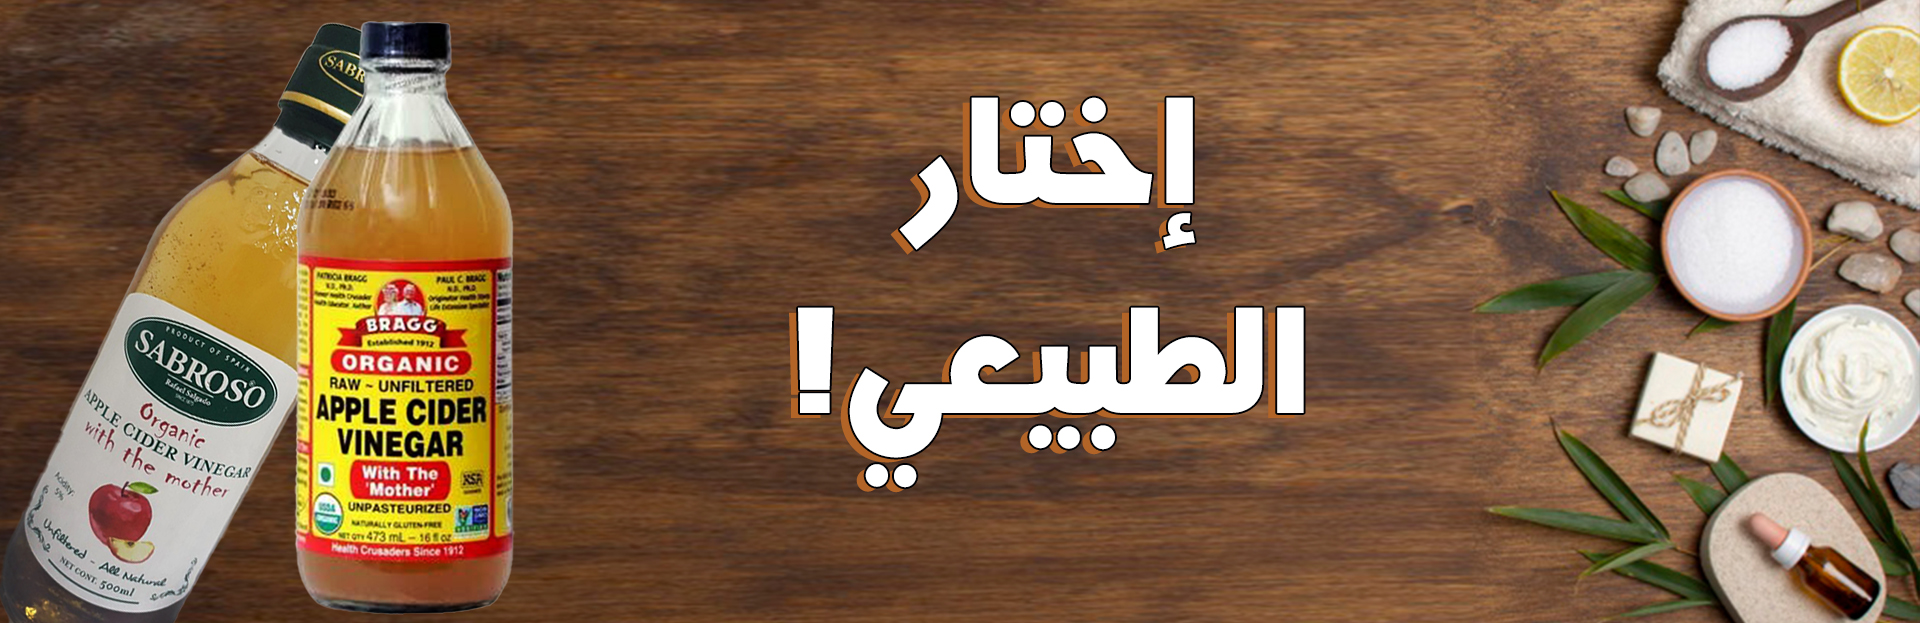 Homepage1 Slider Arabic